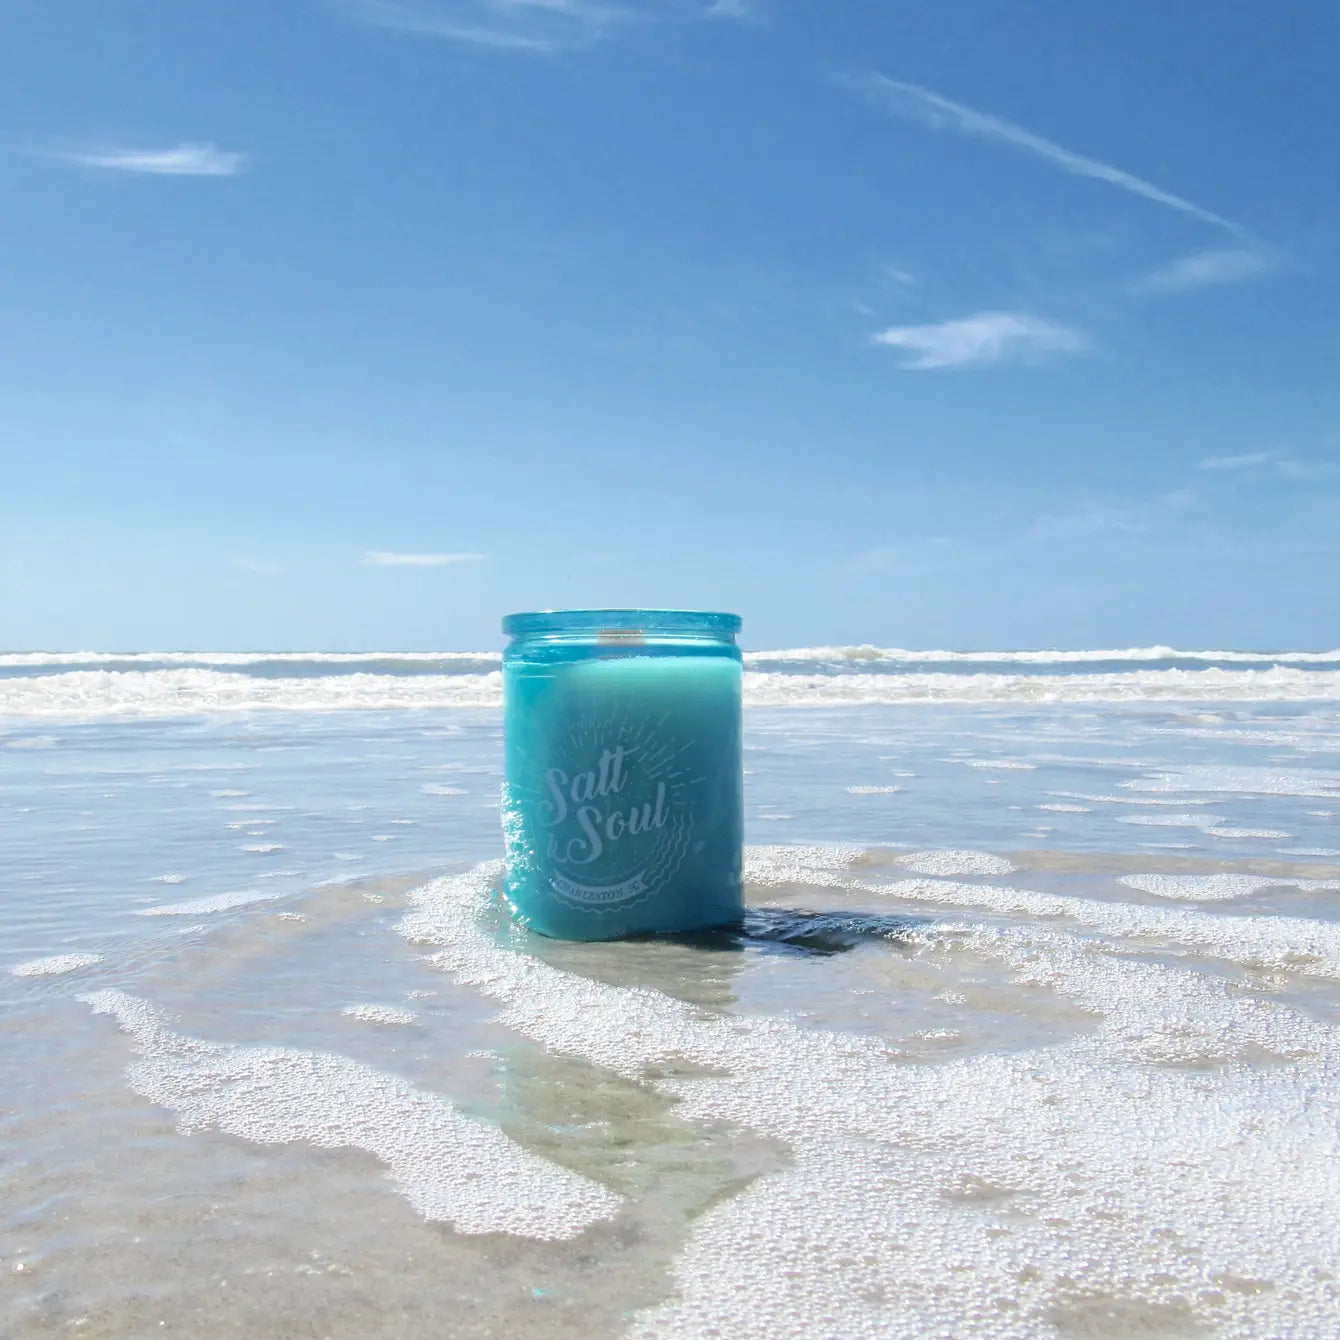 11 oz Waves - Salt + Soul Coastal Collection - Pluff Mud Mercantile